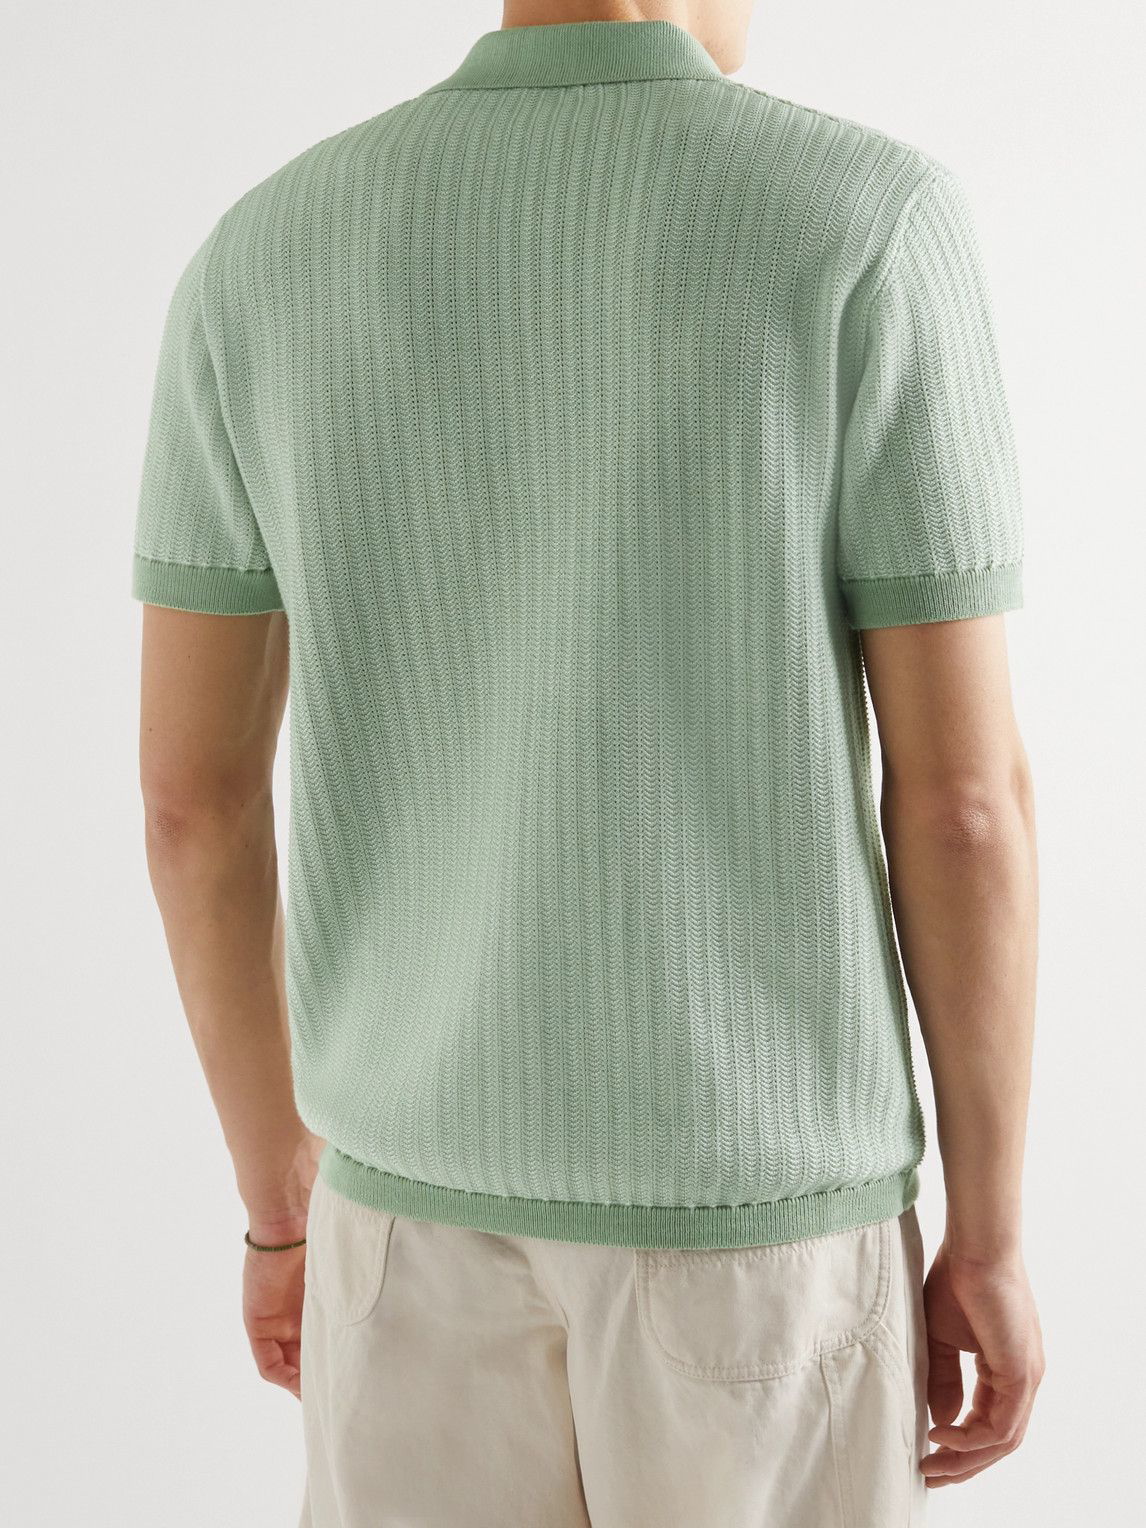 MR P. Crochet-Knit Cotton and Silk-Blend Polo Shirt for Men